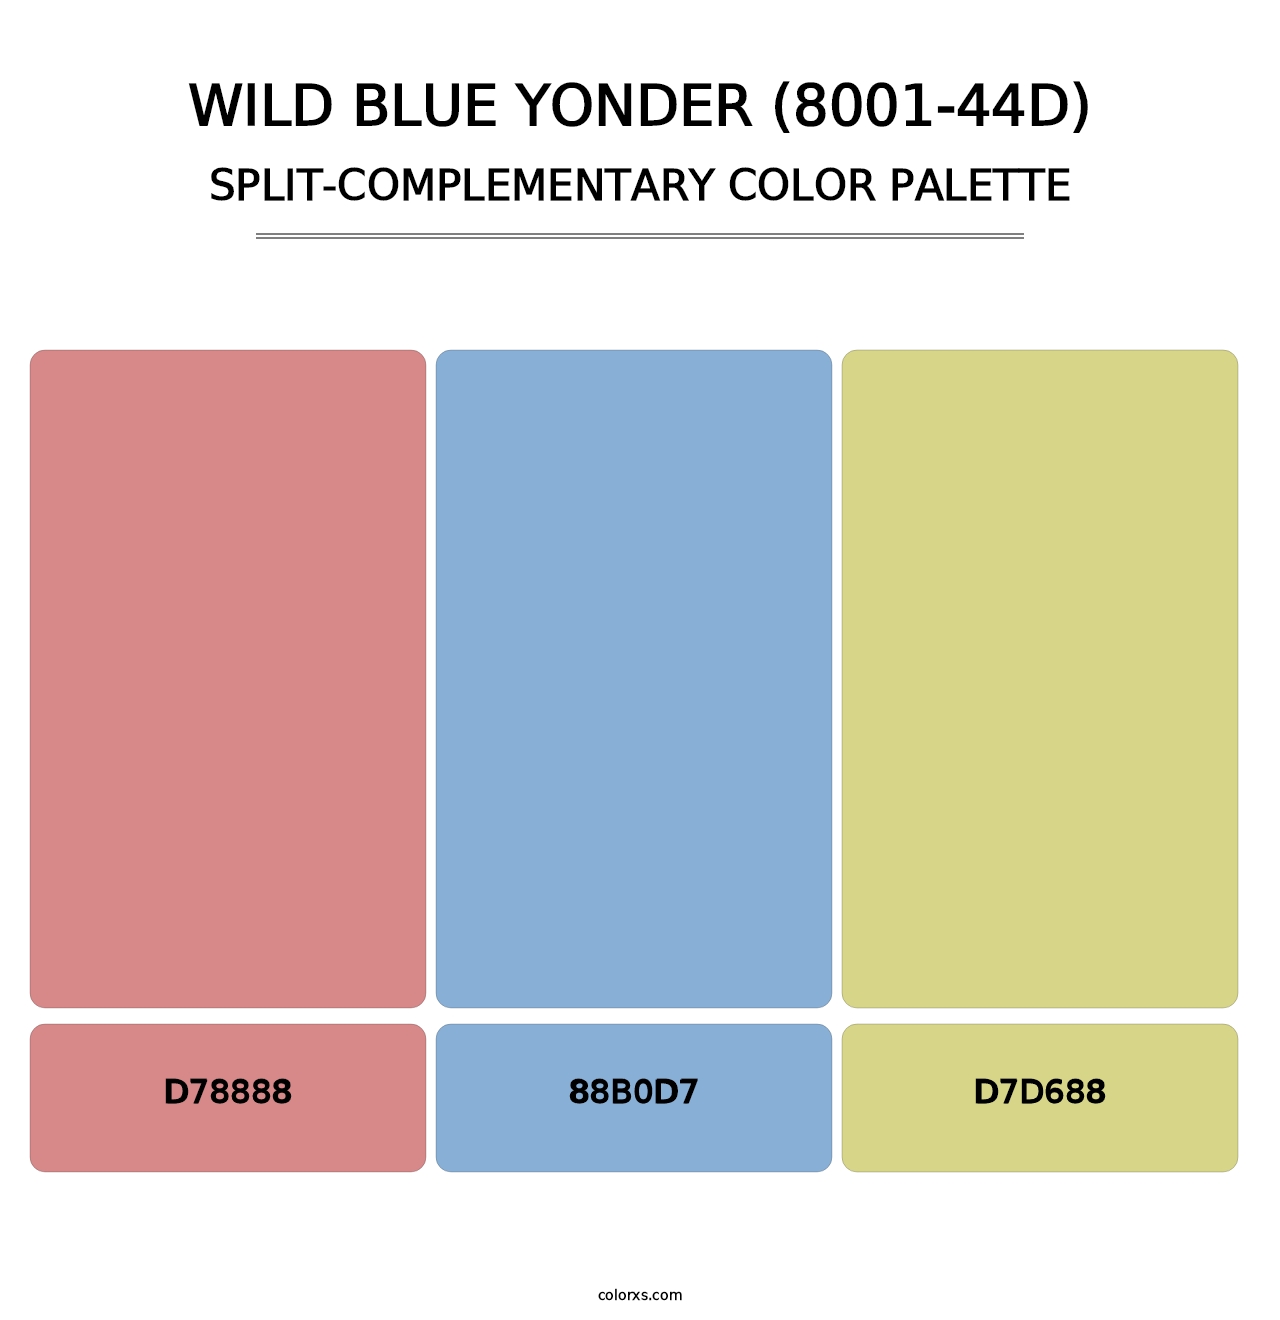 Wild Blue Yonder (8001-44D) - Split-Complementary Color Palette